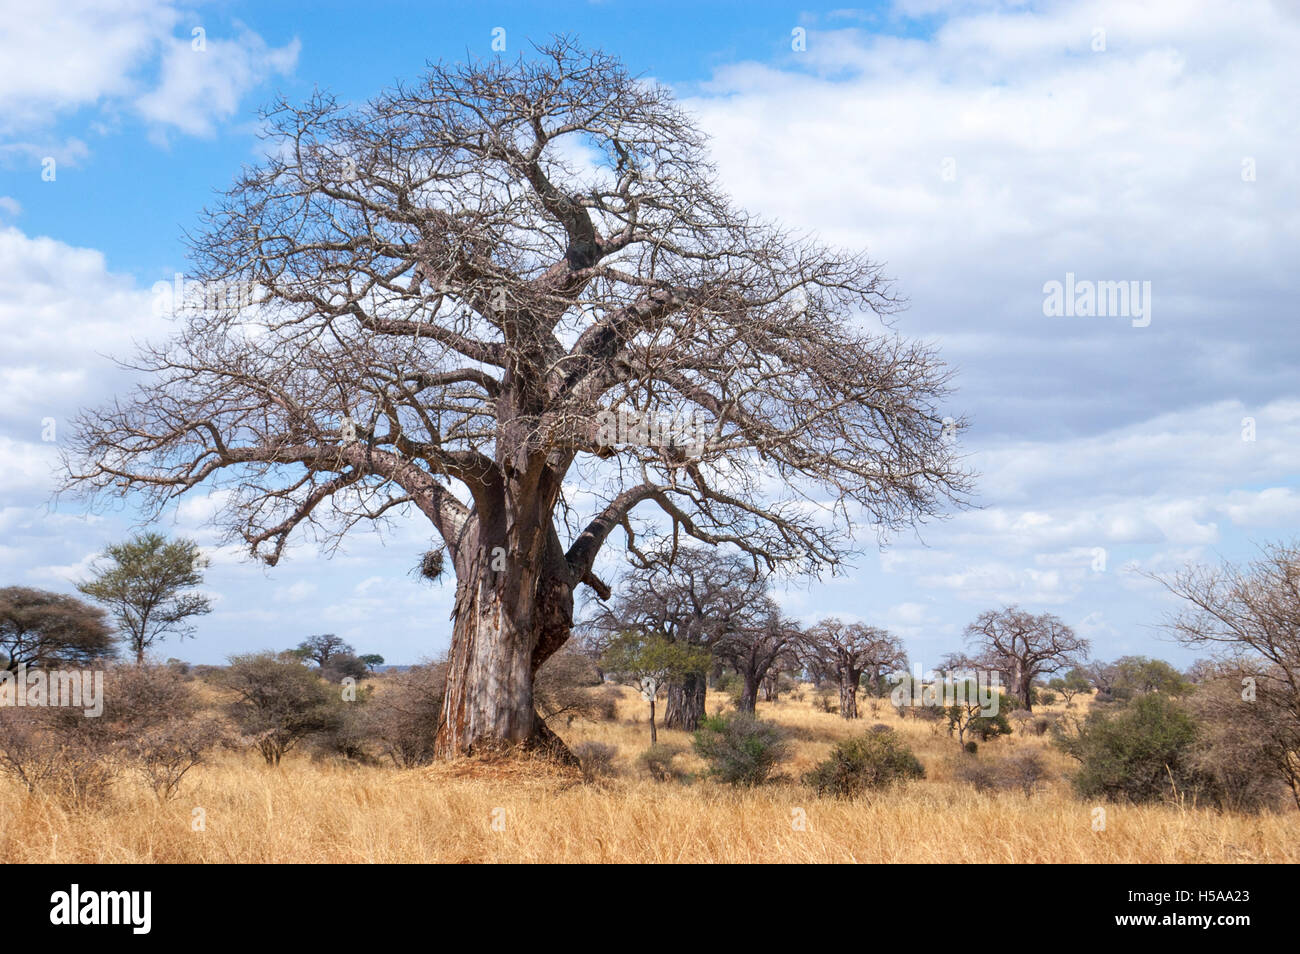 Baobab tree (Adansonia digitata) in Acacia-Commiphora bushland habitat, Tarangire National Park, Tanzania Stock Photo